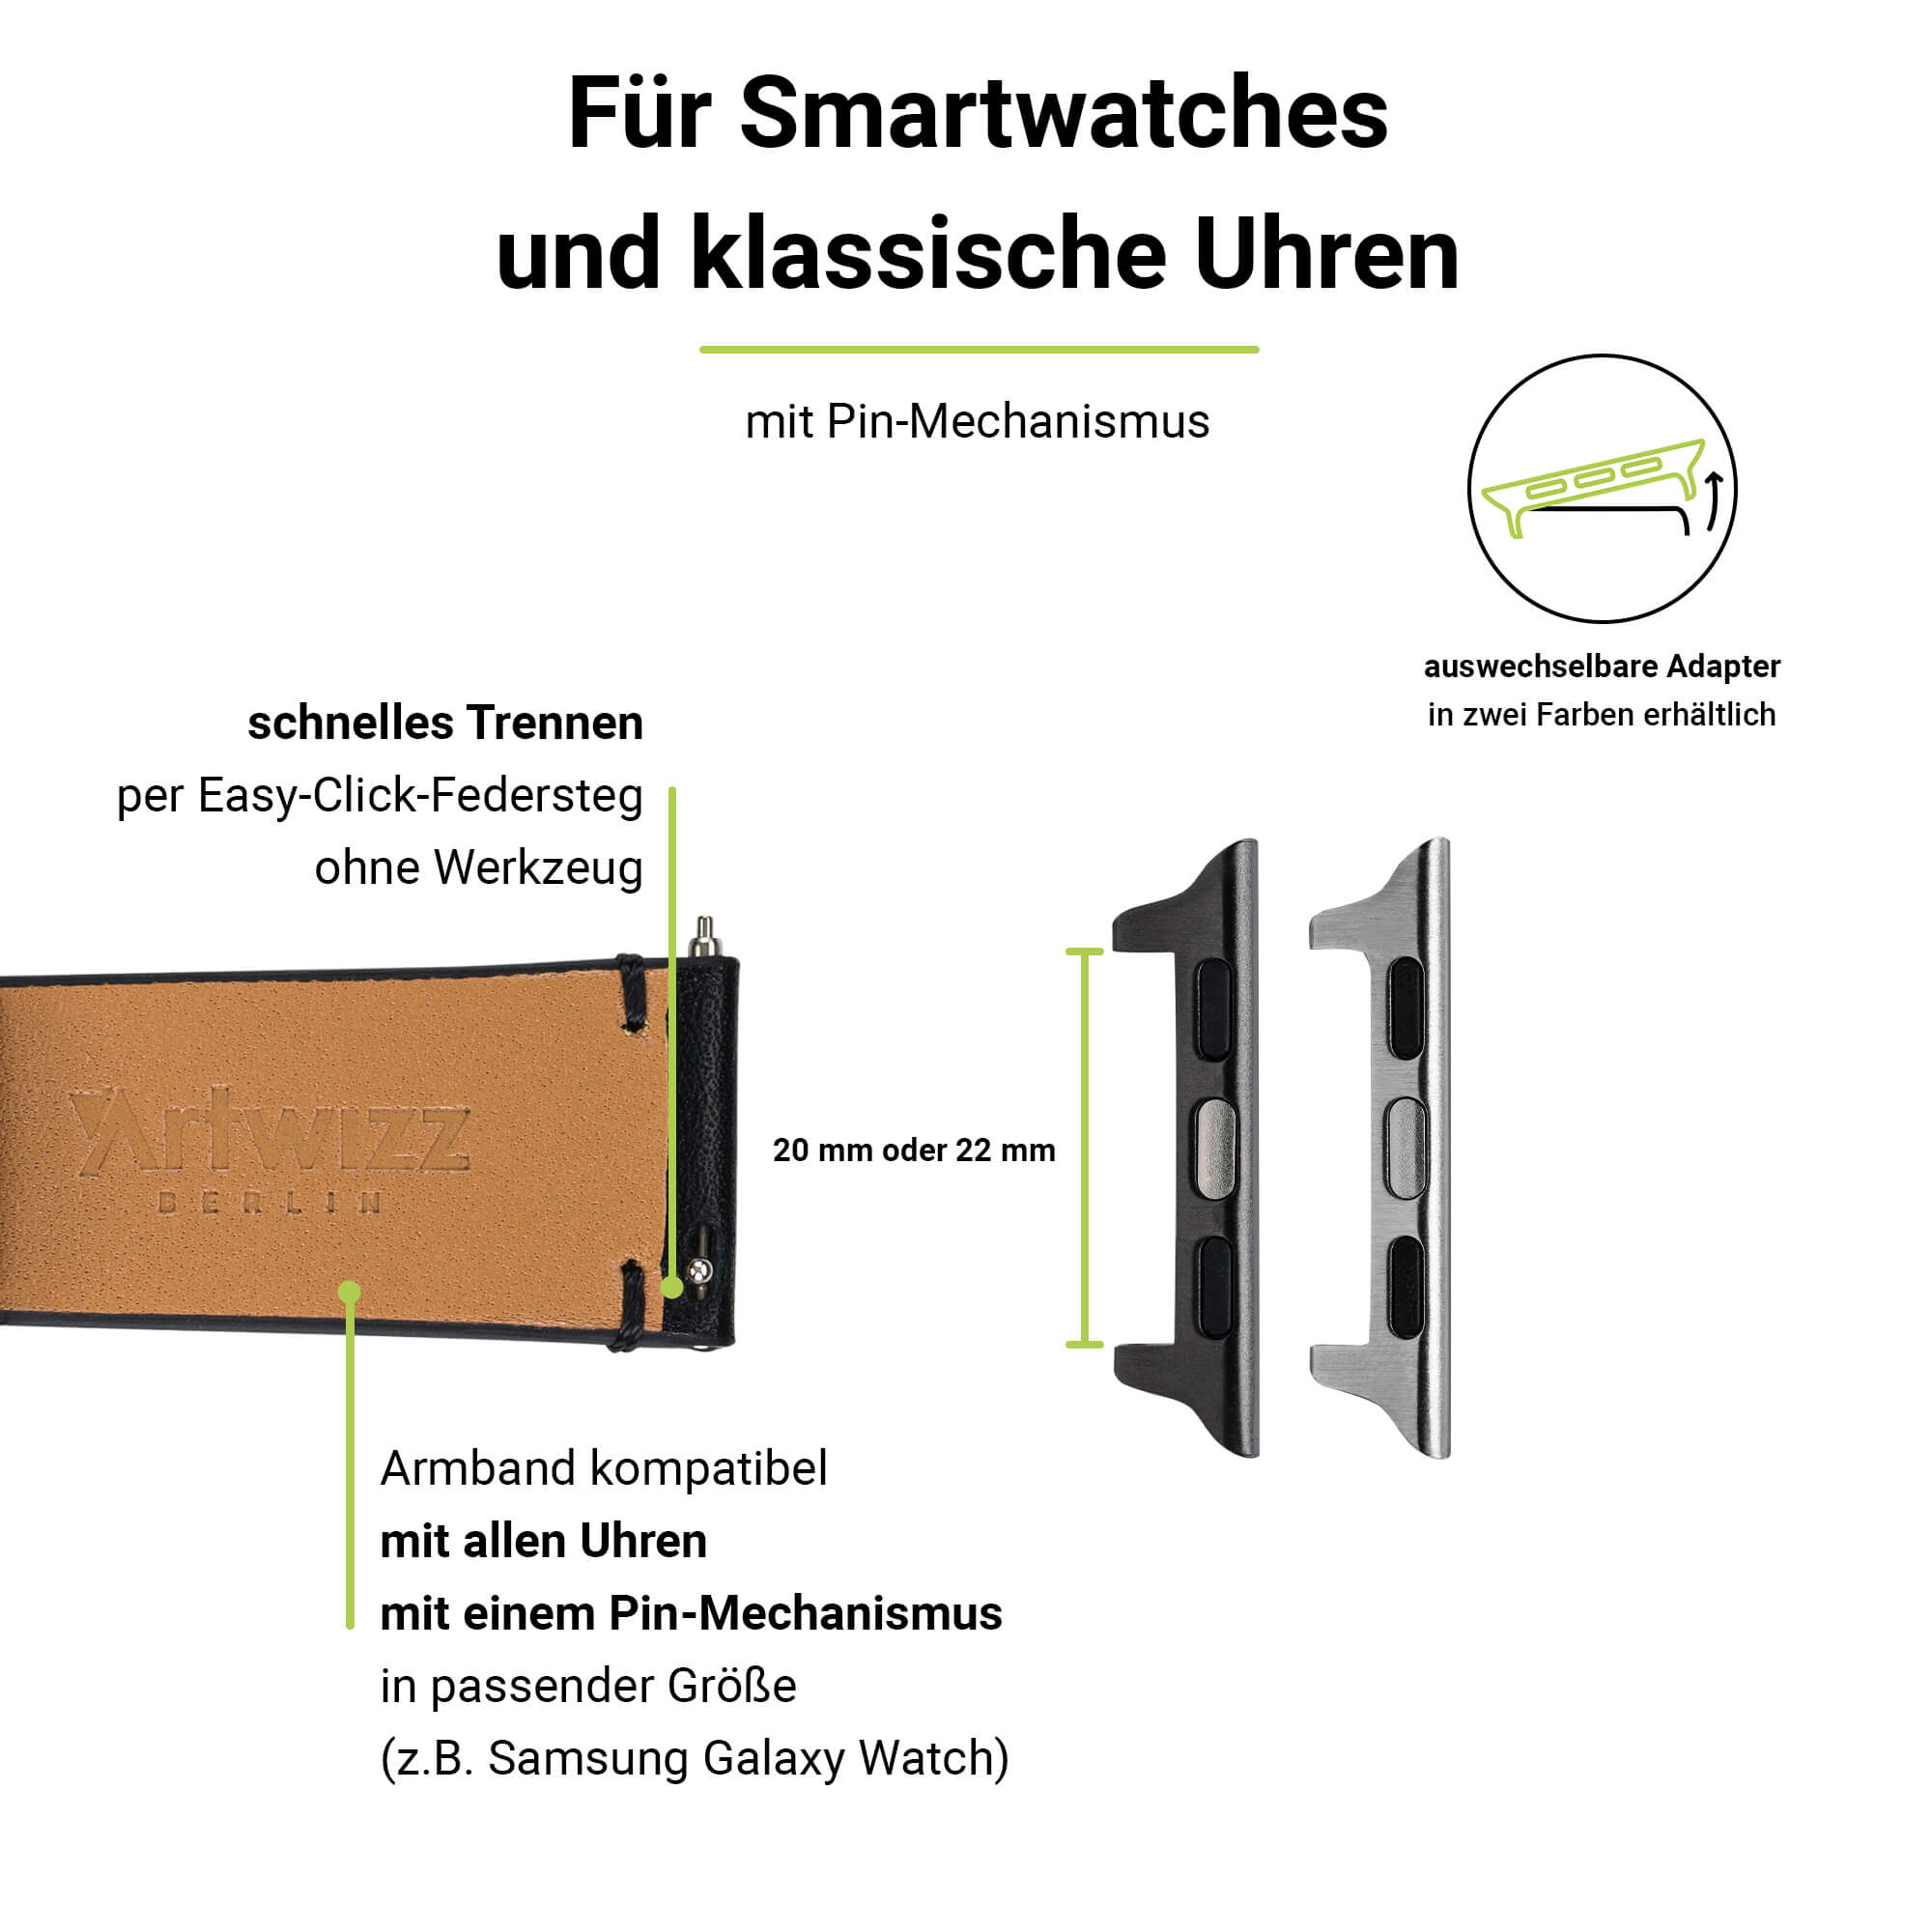 Apple, SE 6-4 Apple 3-1 & (38mm), 9-7 Leather, ARTWIZZ (40mm), WatchBand Smartband, (41mm), Watch Series Schwarz